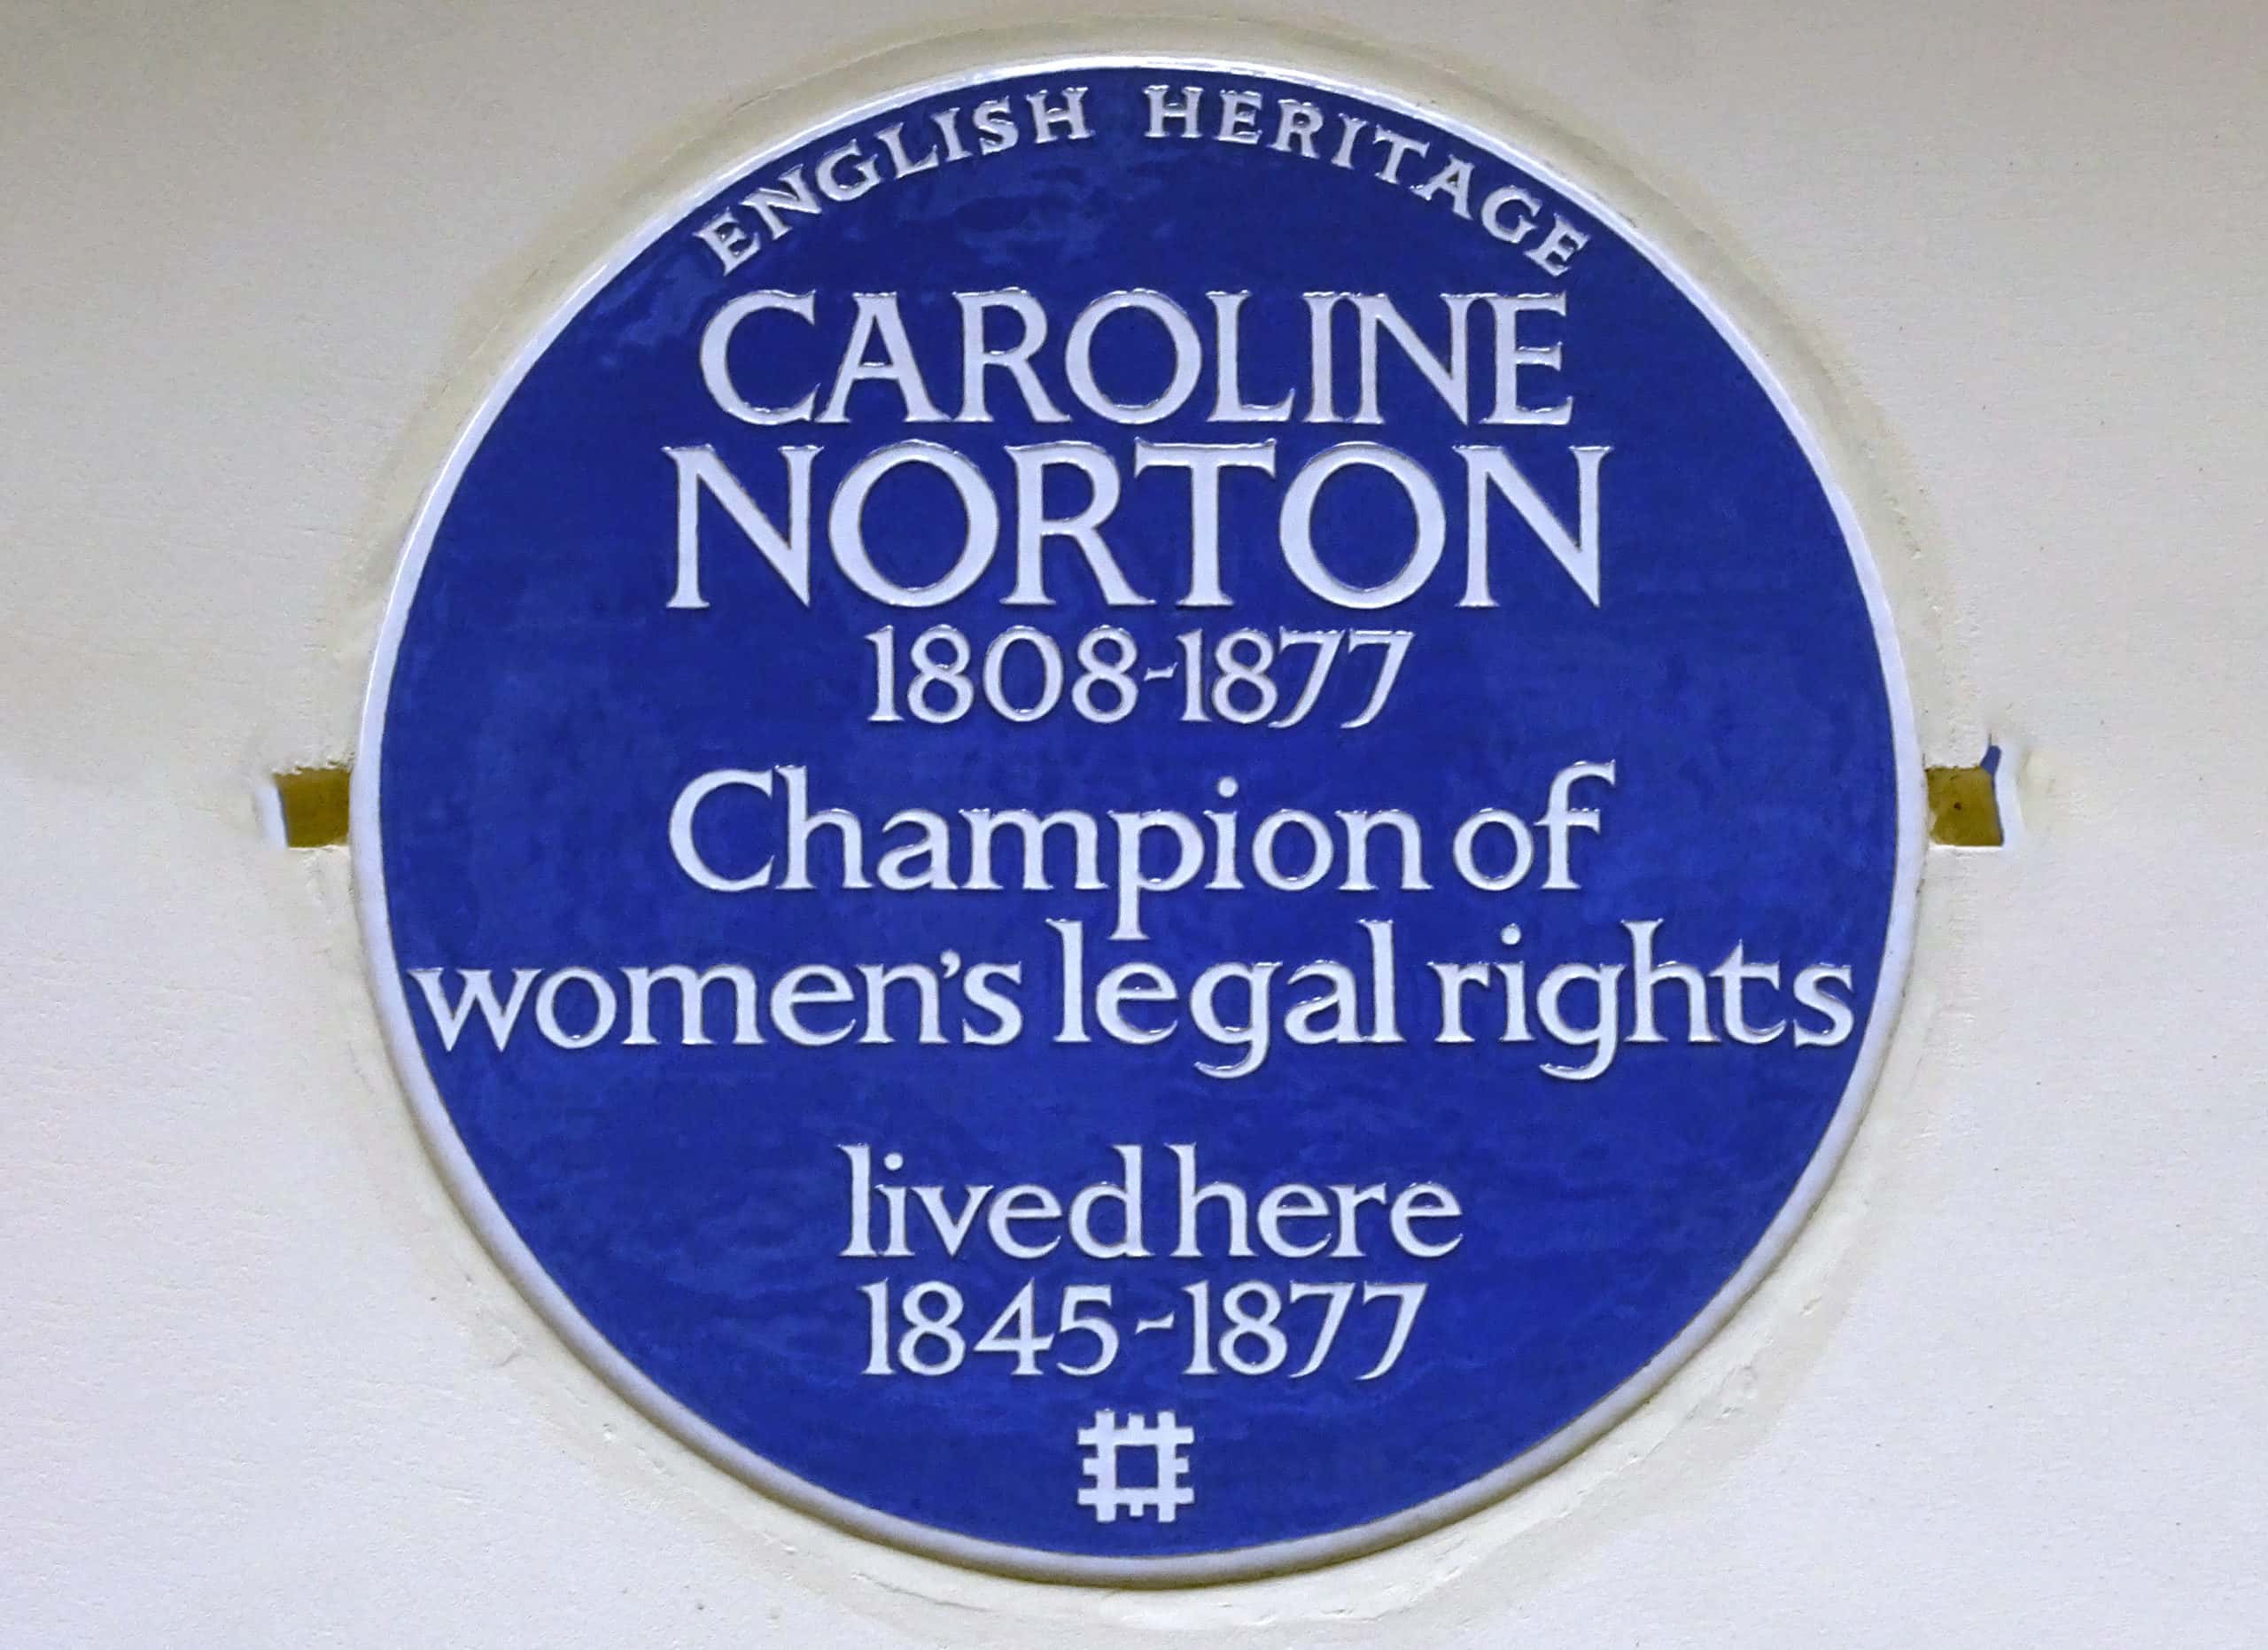 Caroline Norton facts